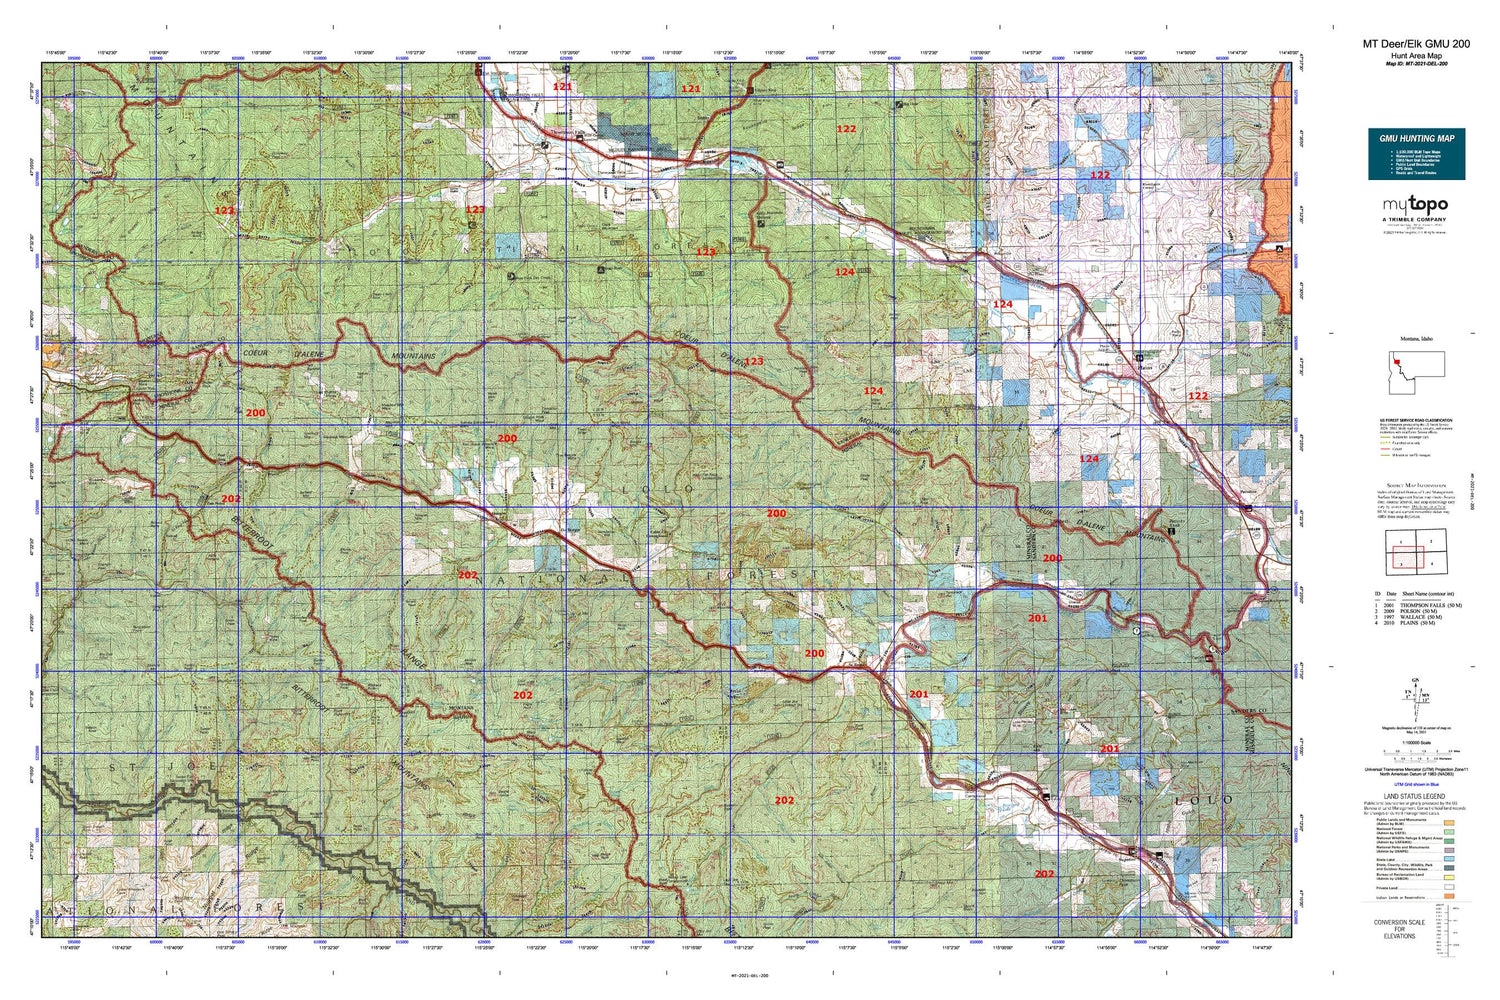 Montana Deer/Elk GMU 200 Map Image